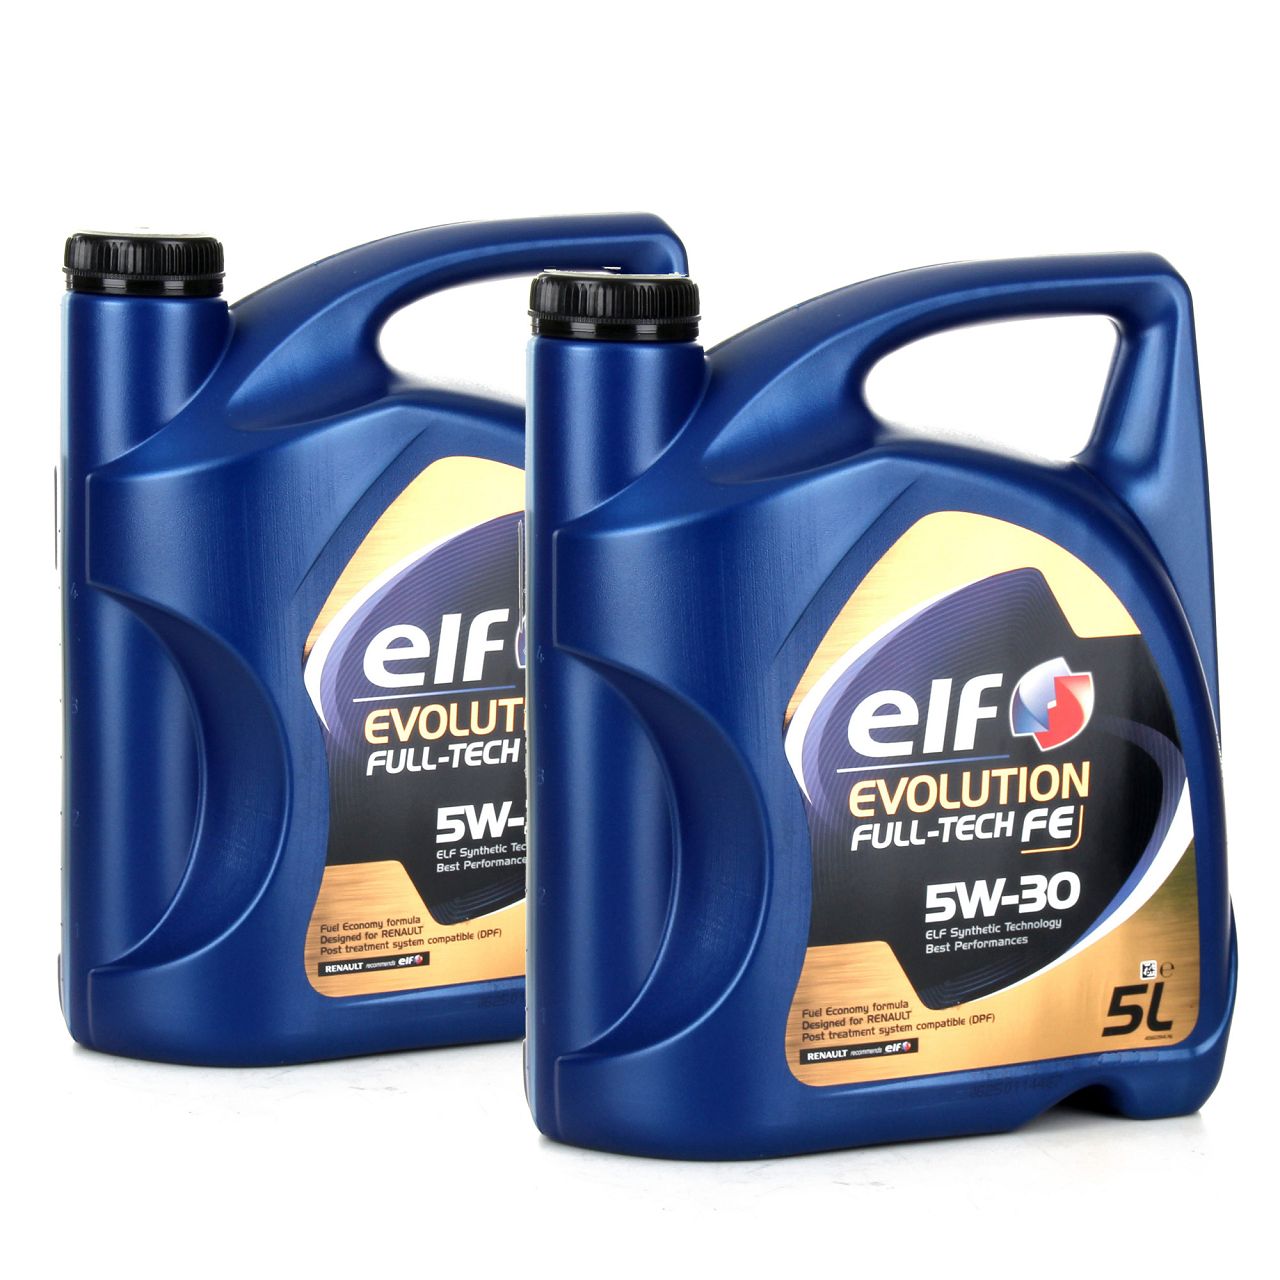 10 Liter elf Evolution Full-Tech FE 5W-30 Motoröl Öl RENAULT RN0720 MB 226.51